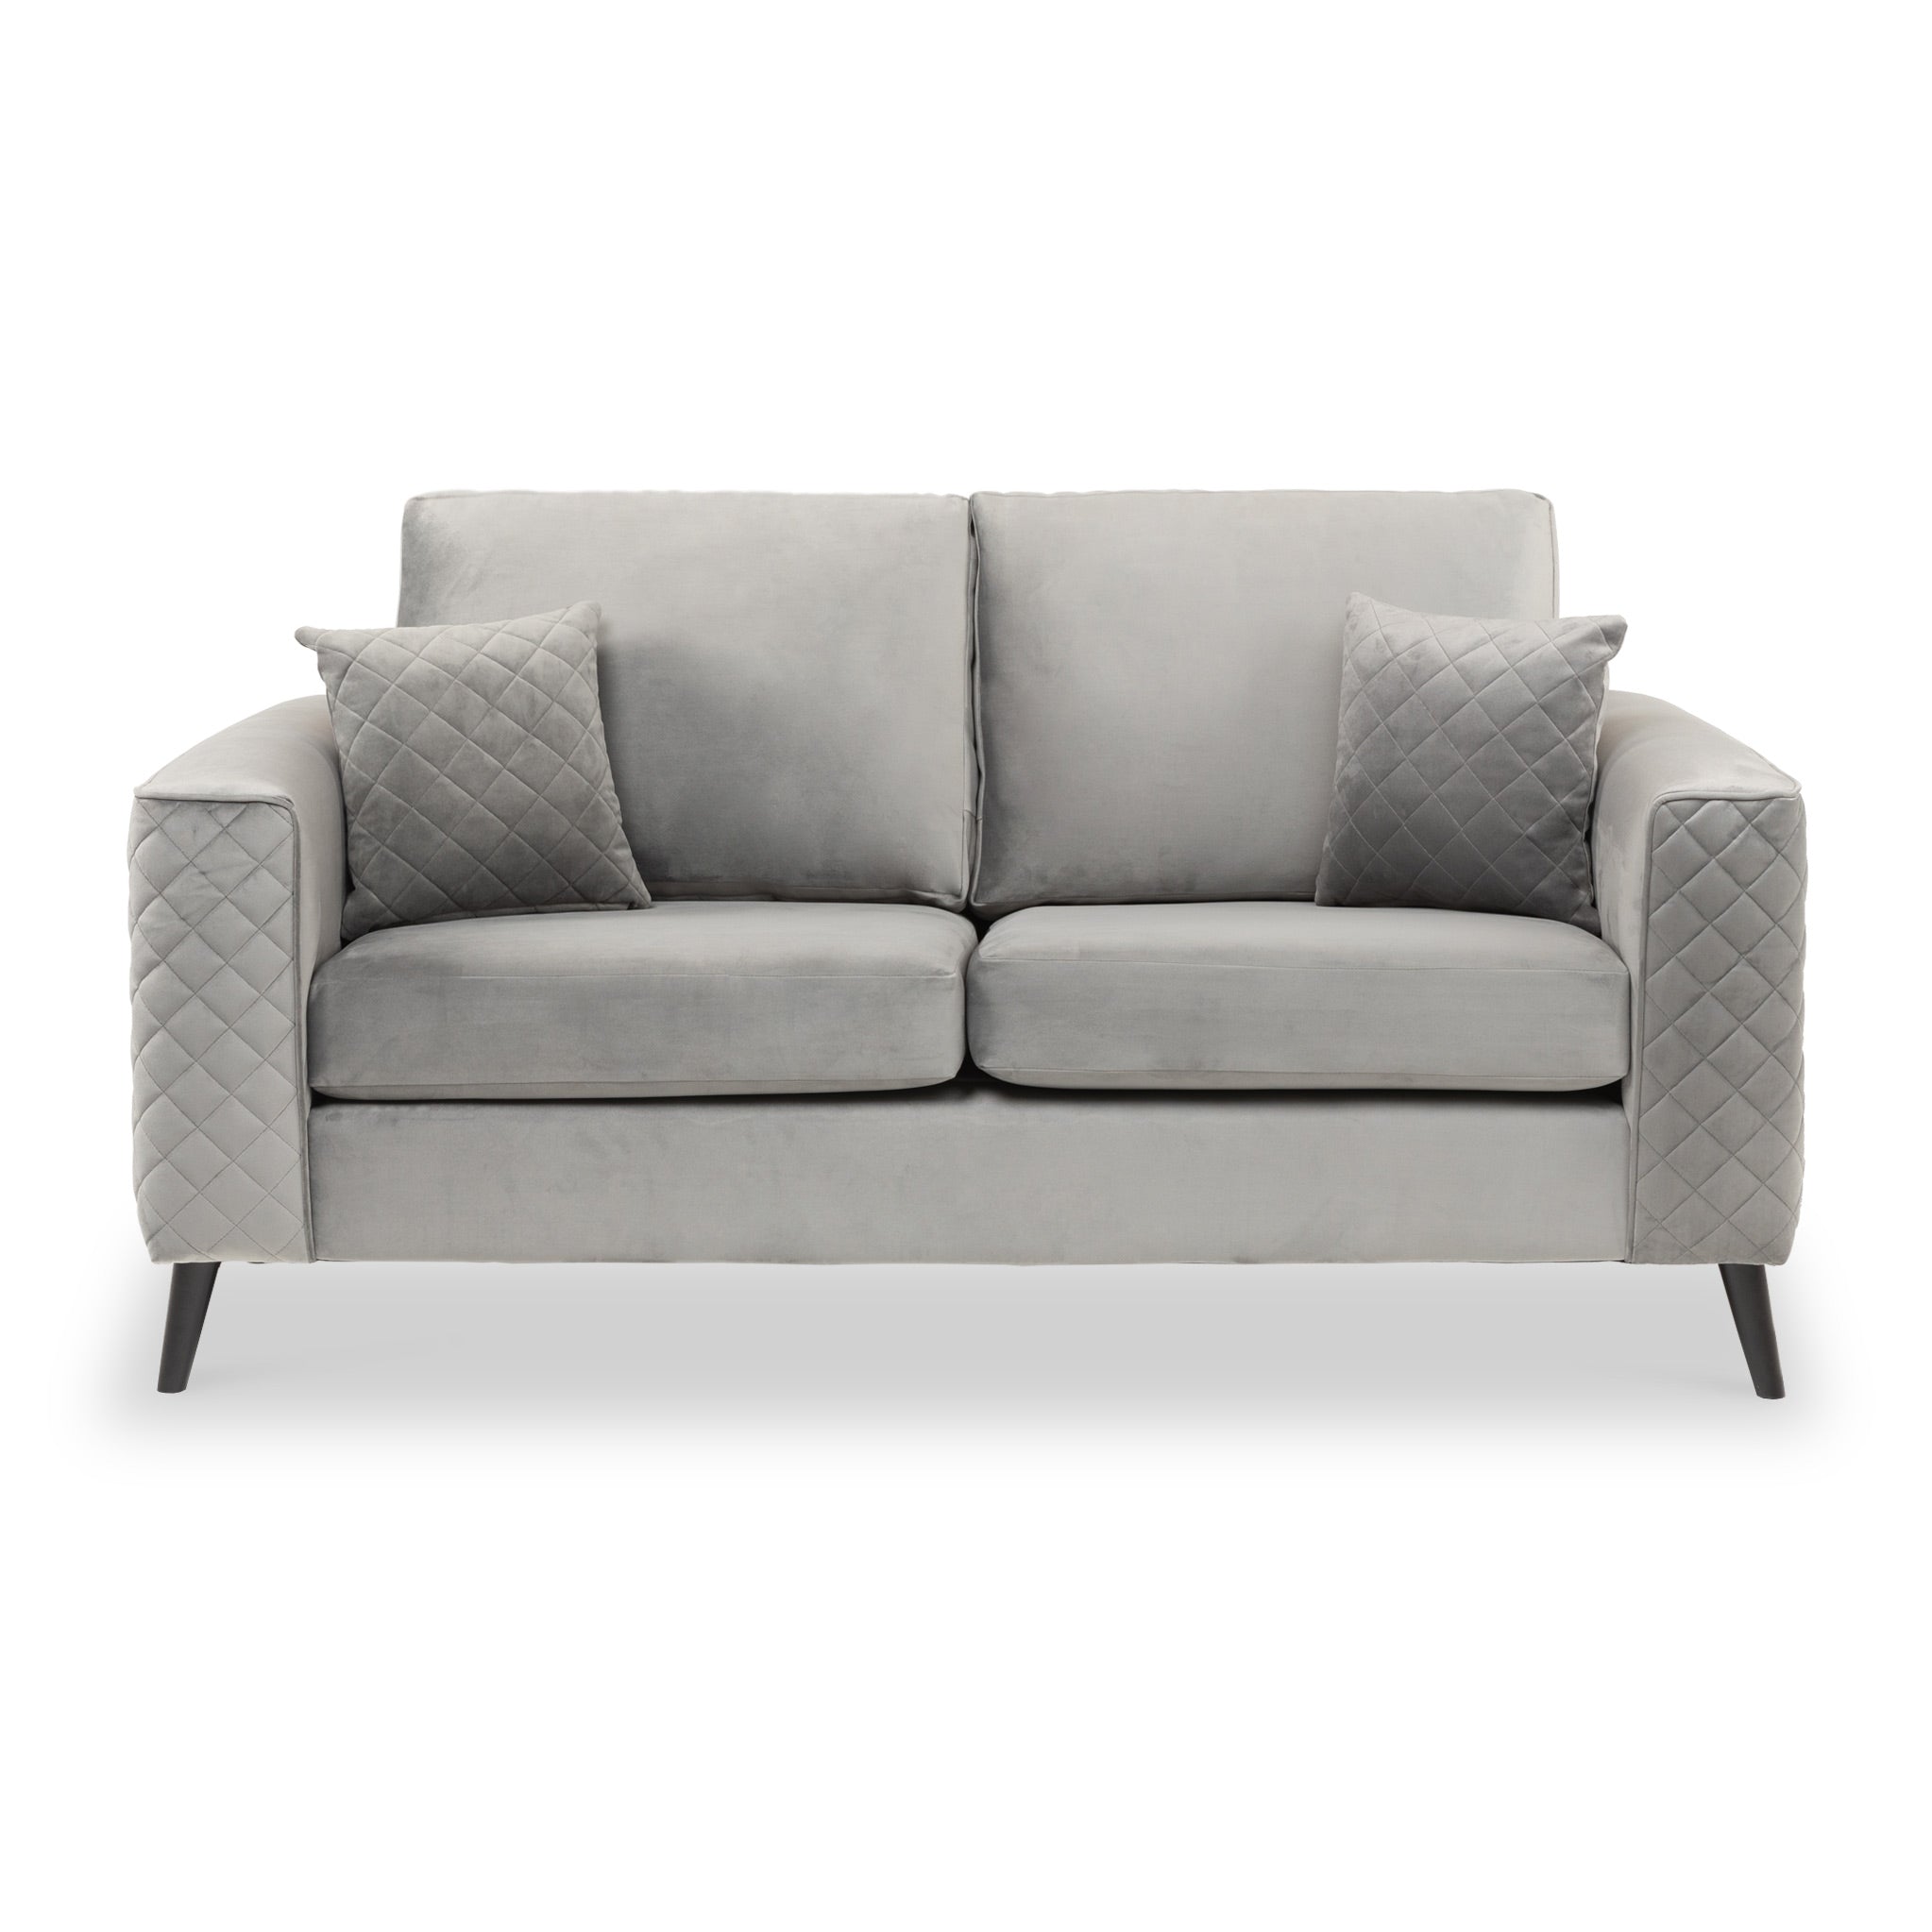 Swift Velvet 3 Seater Sofa Chic Fabric Couch Roseland